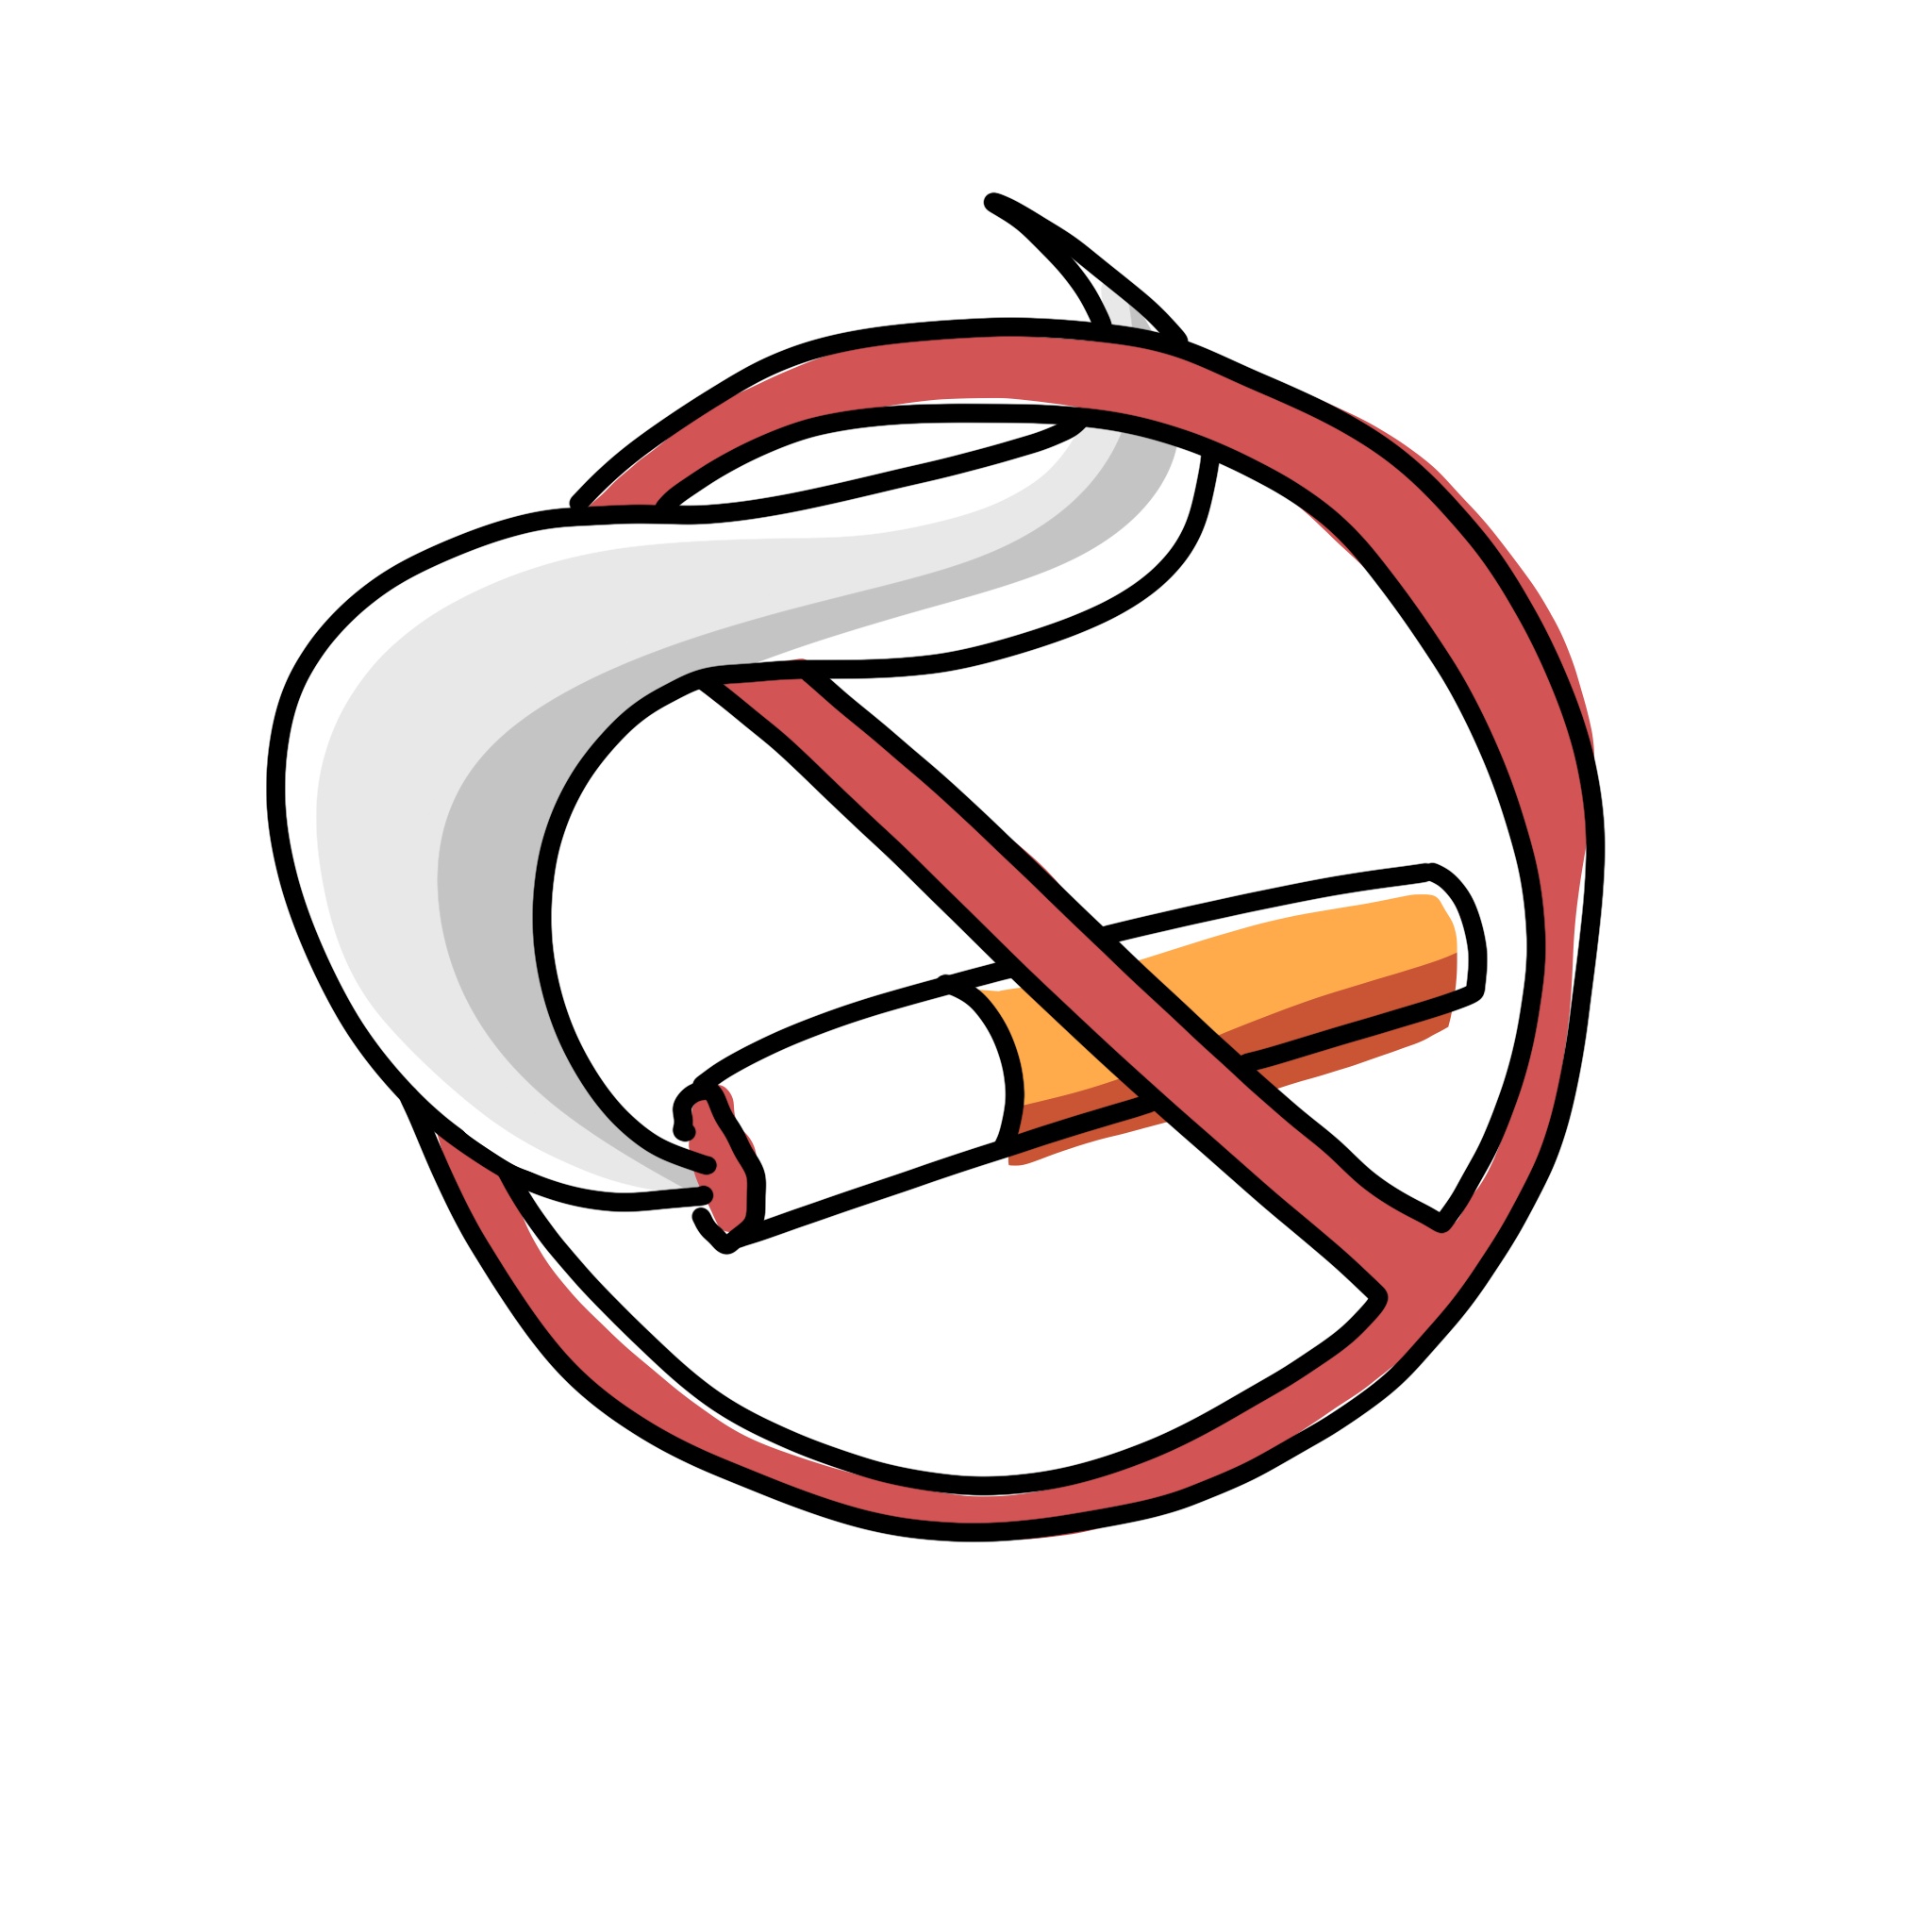 illustration of a "no smoking" icon